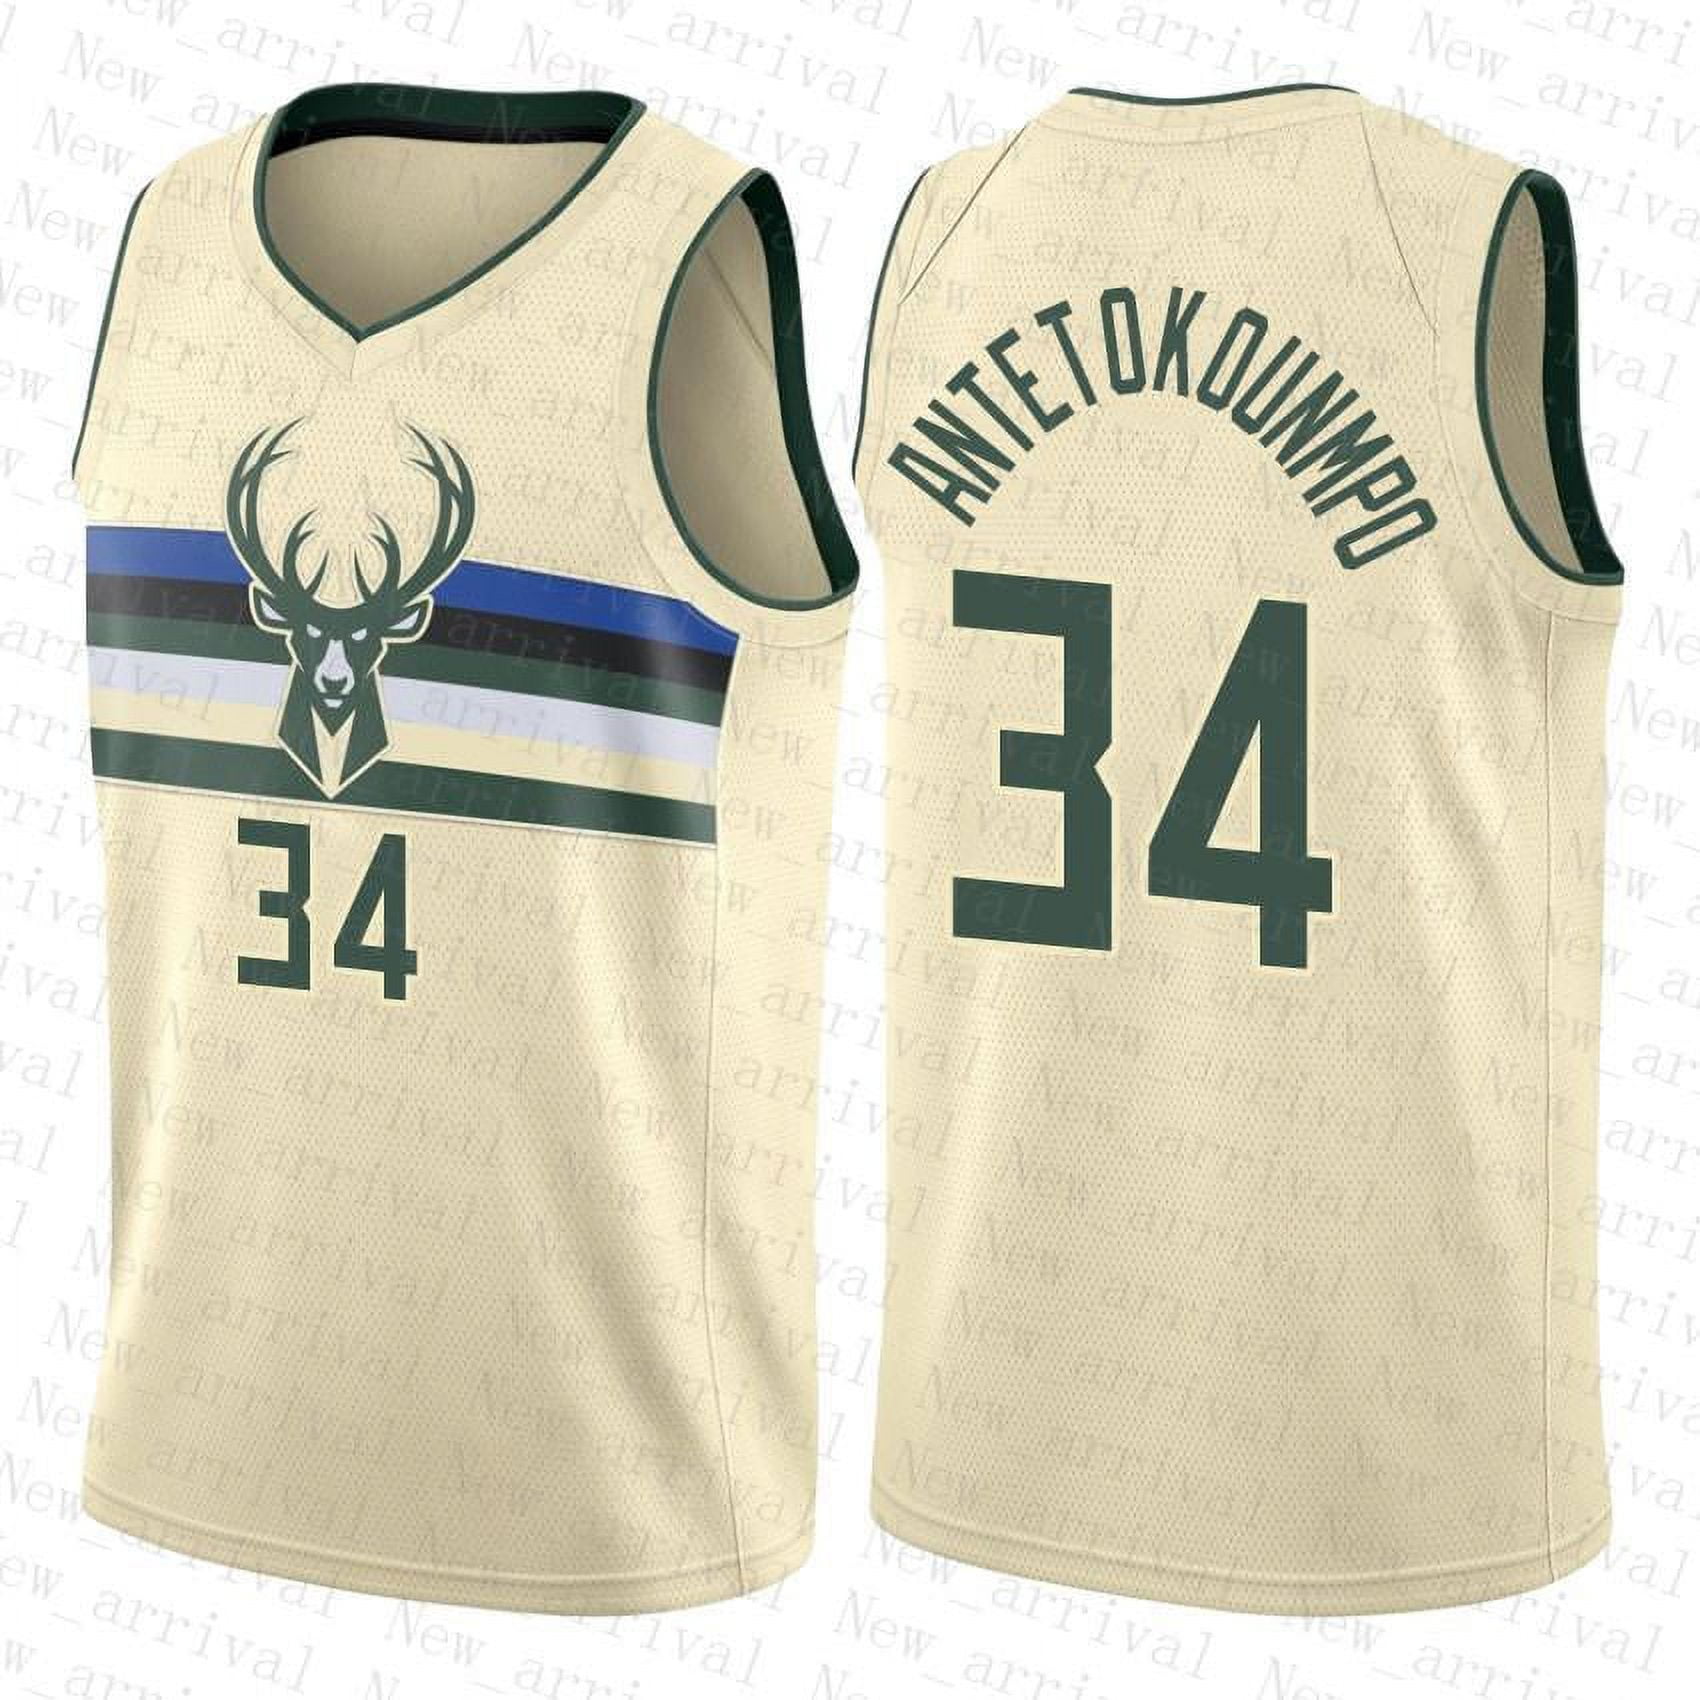 Graphic Style Giannis Antetokounmpo Milwaukee Bucks Basketball Unisex  Unisex T-Shirt